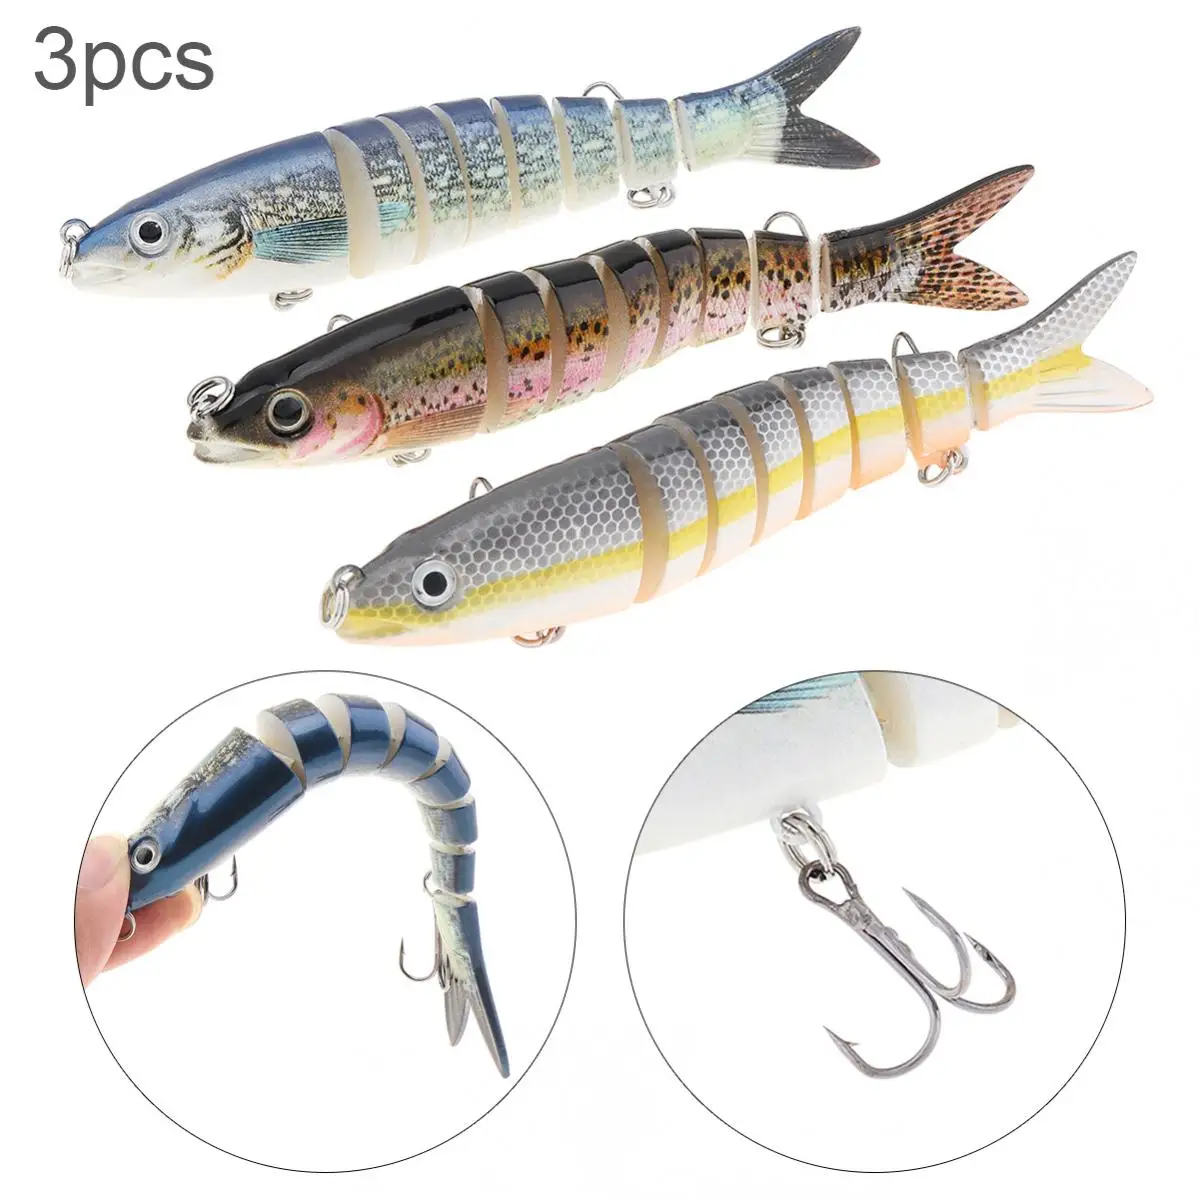 

3pcs 8 Segments Colorful Fishing Lures 13.5cm 19g Fish Minnow Swimbait Tackle Hook Crank Bait